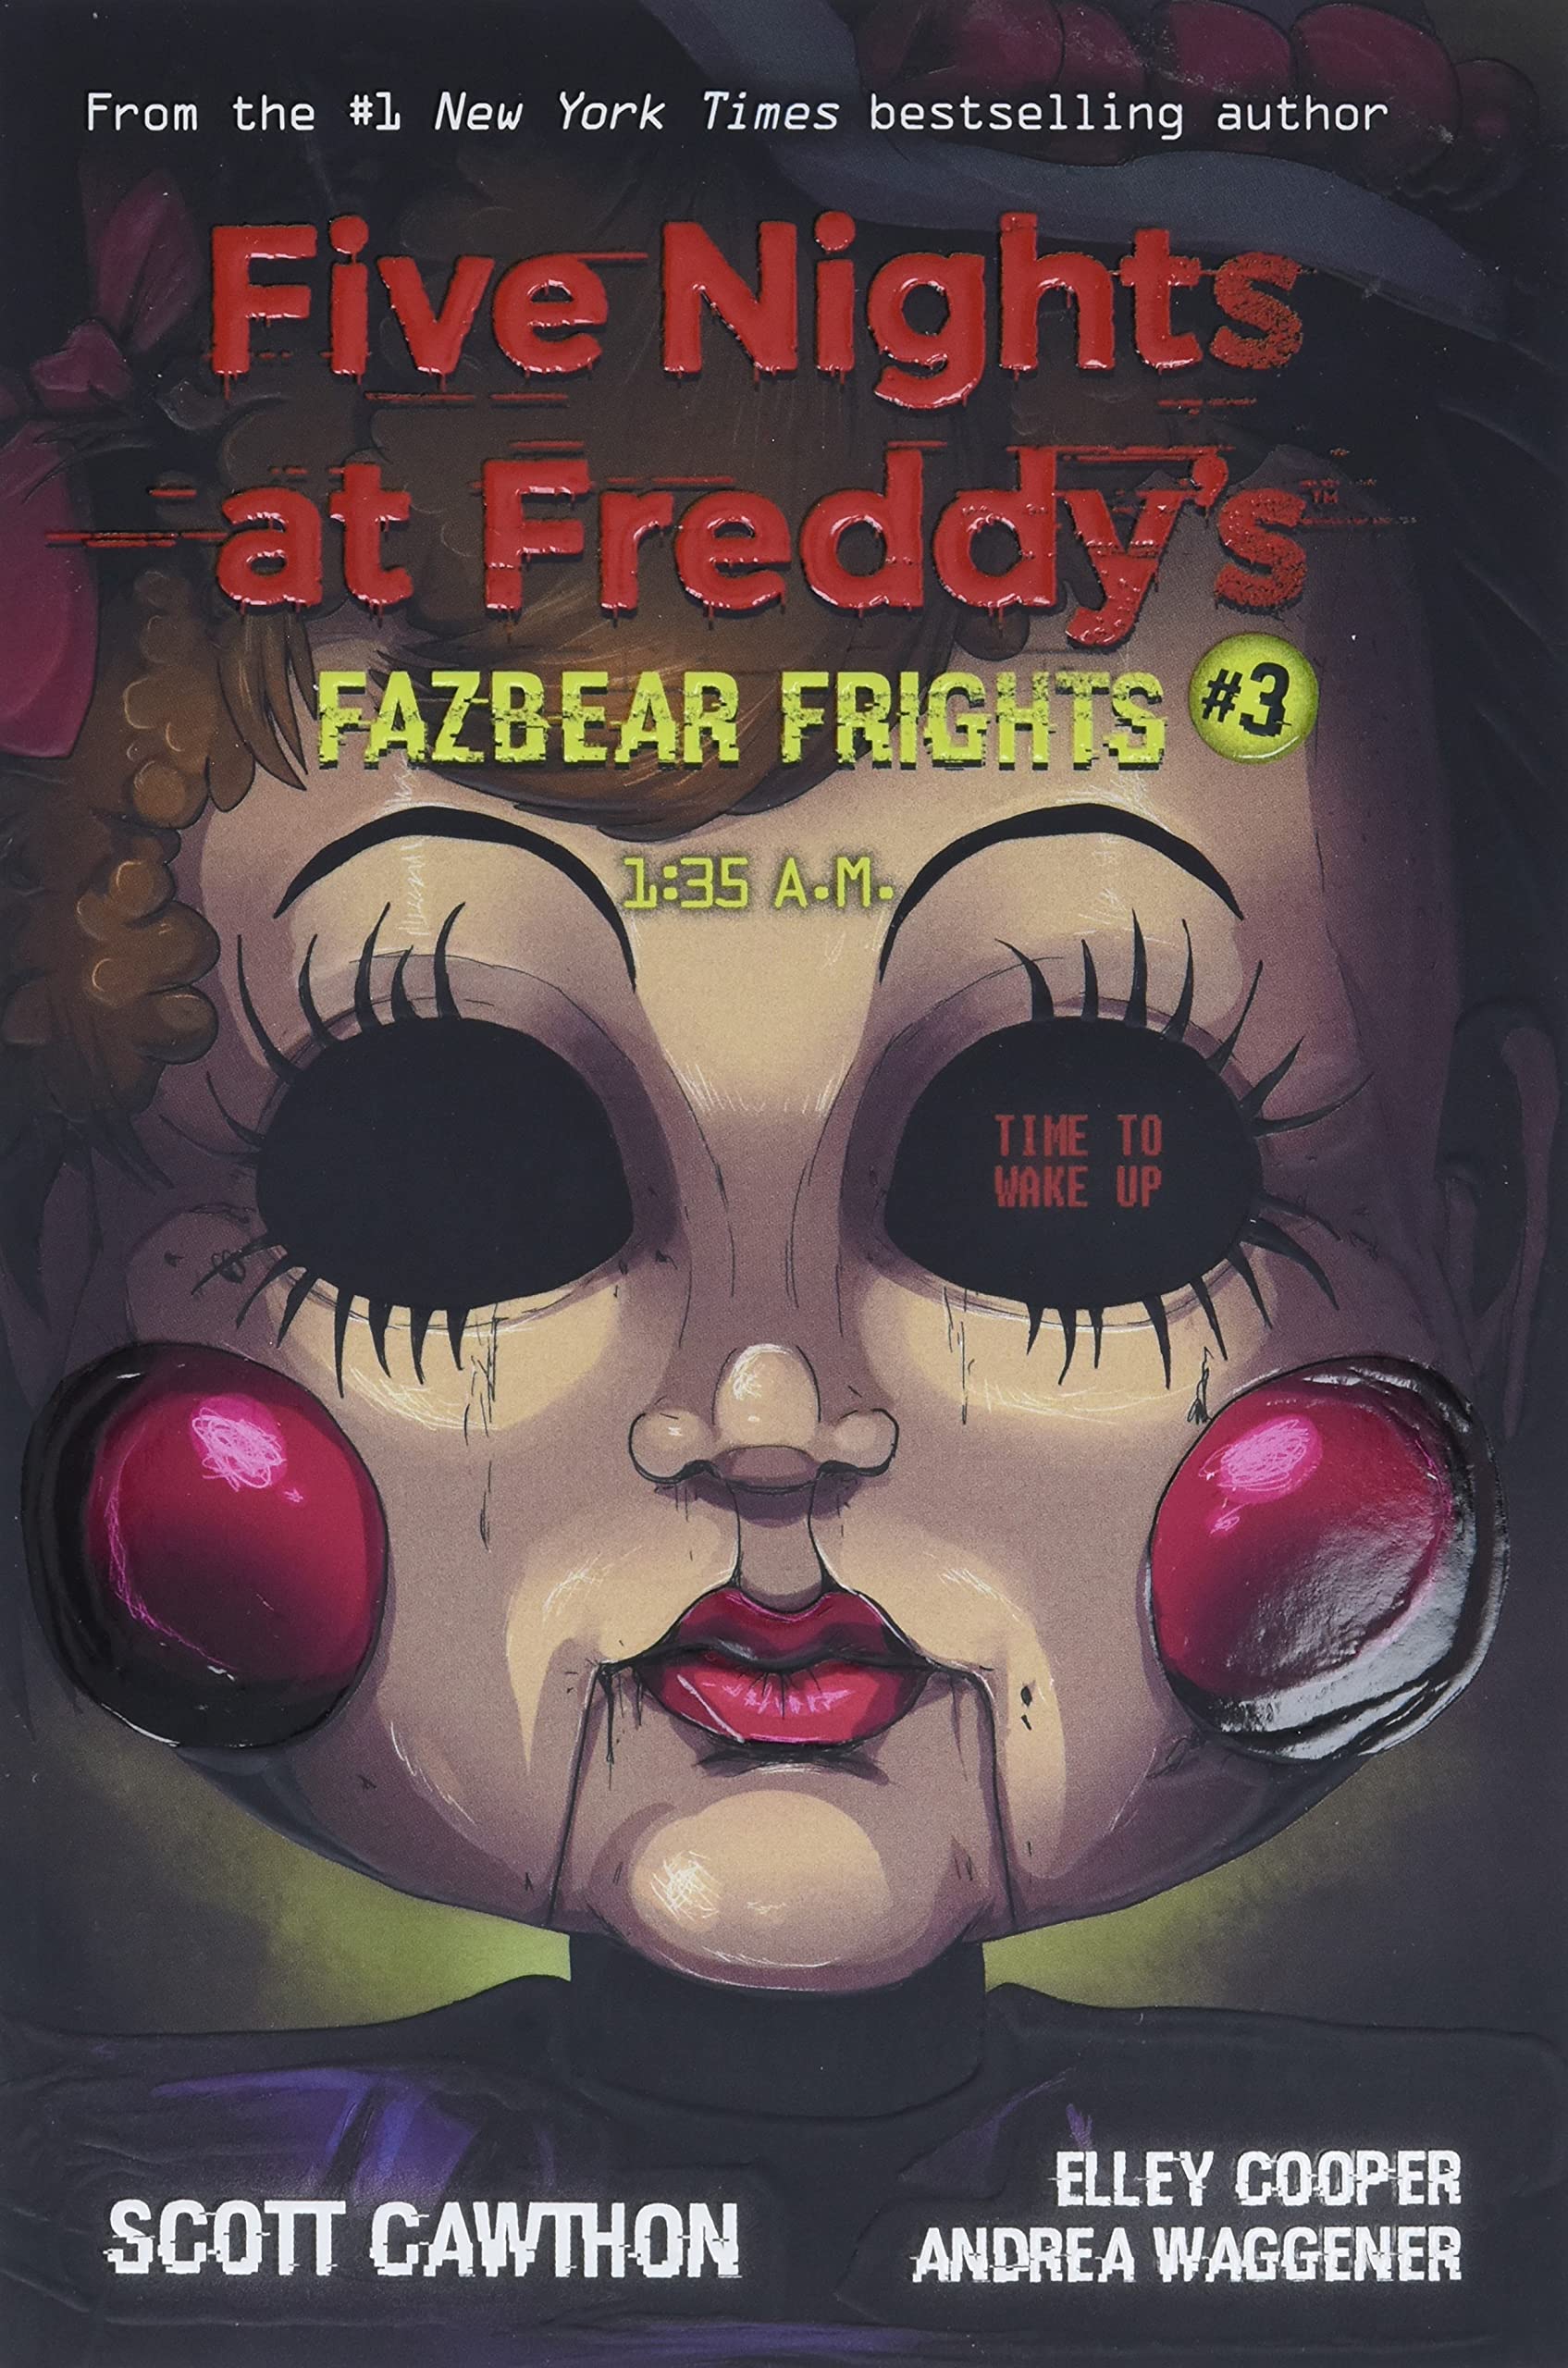 Five Nights at Freddy's #3 : Fazbear Frights - 1:35 A.M.